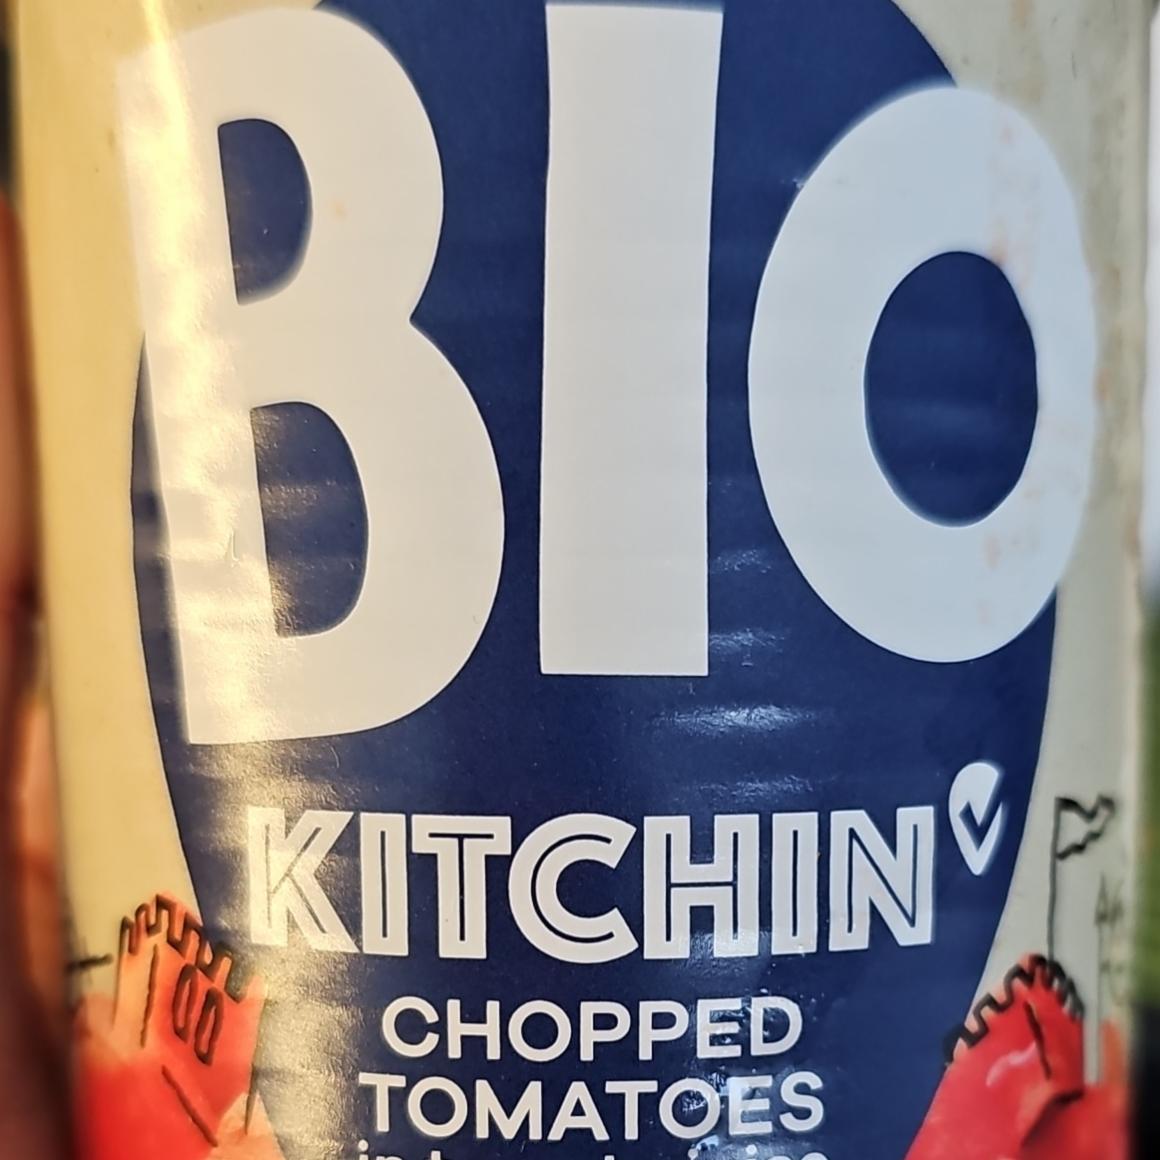 Fotografie - BIO Chopped Tomatoes Kitchin